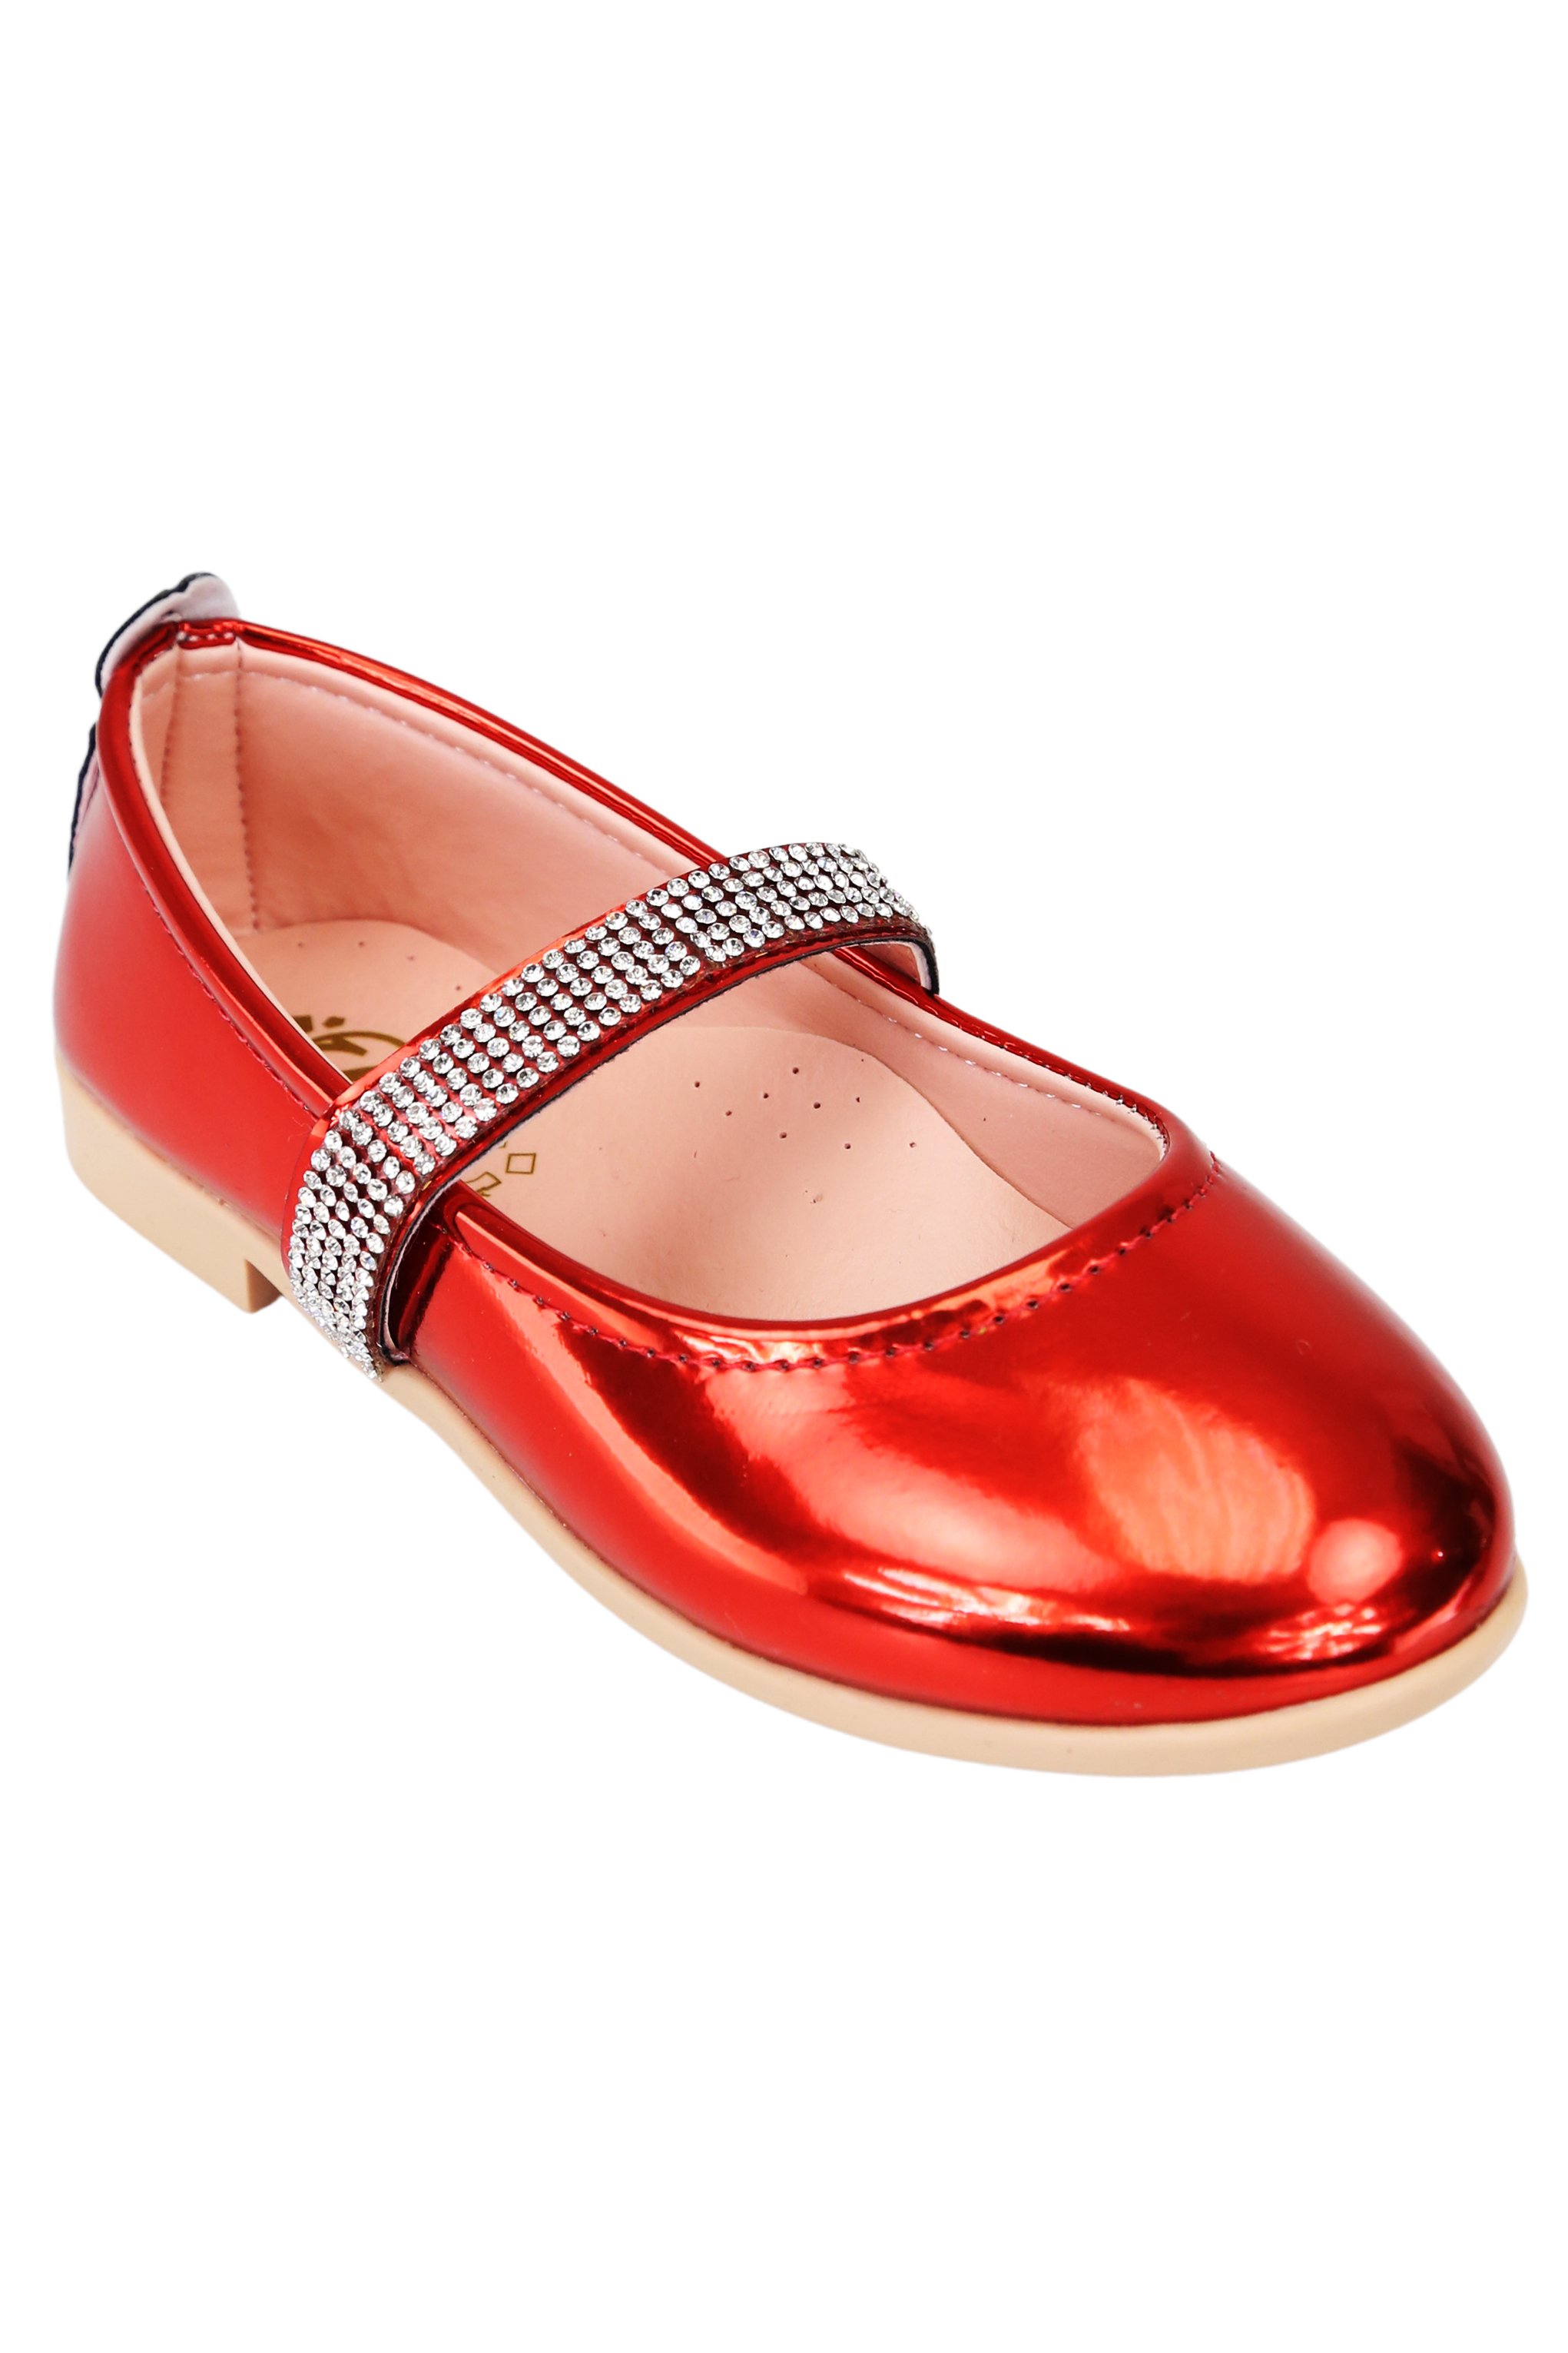 Girls Rhinestone Patent Mary Jane Shoes - ARWEN - Red